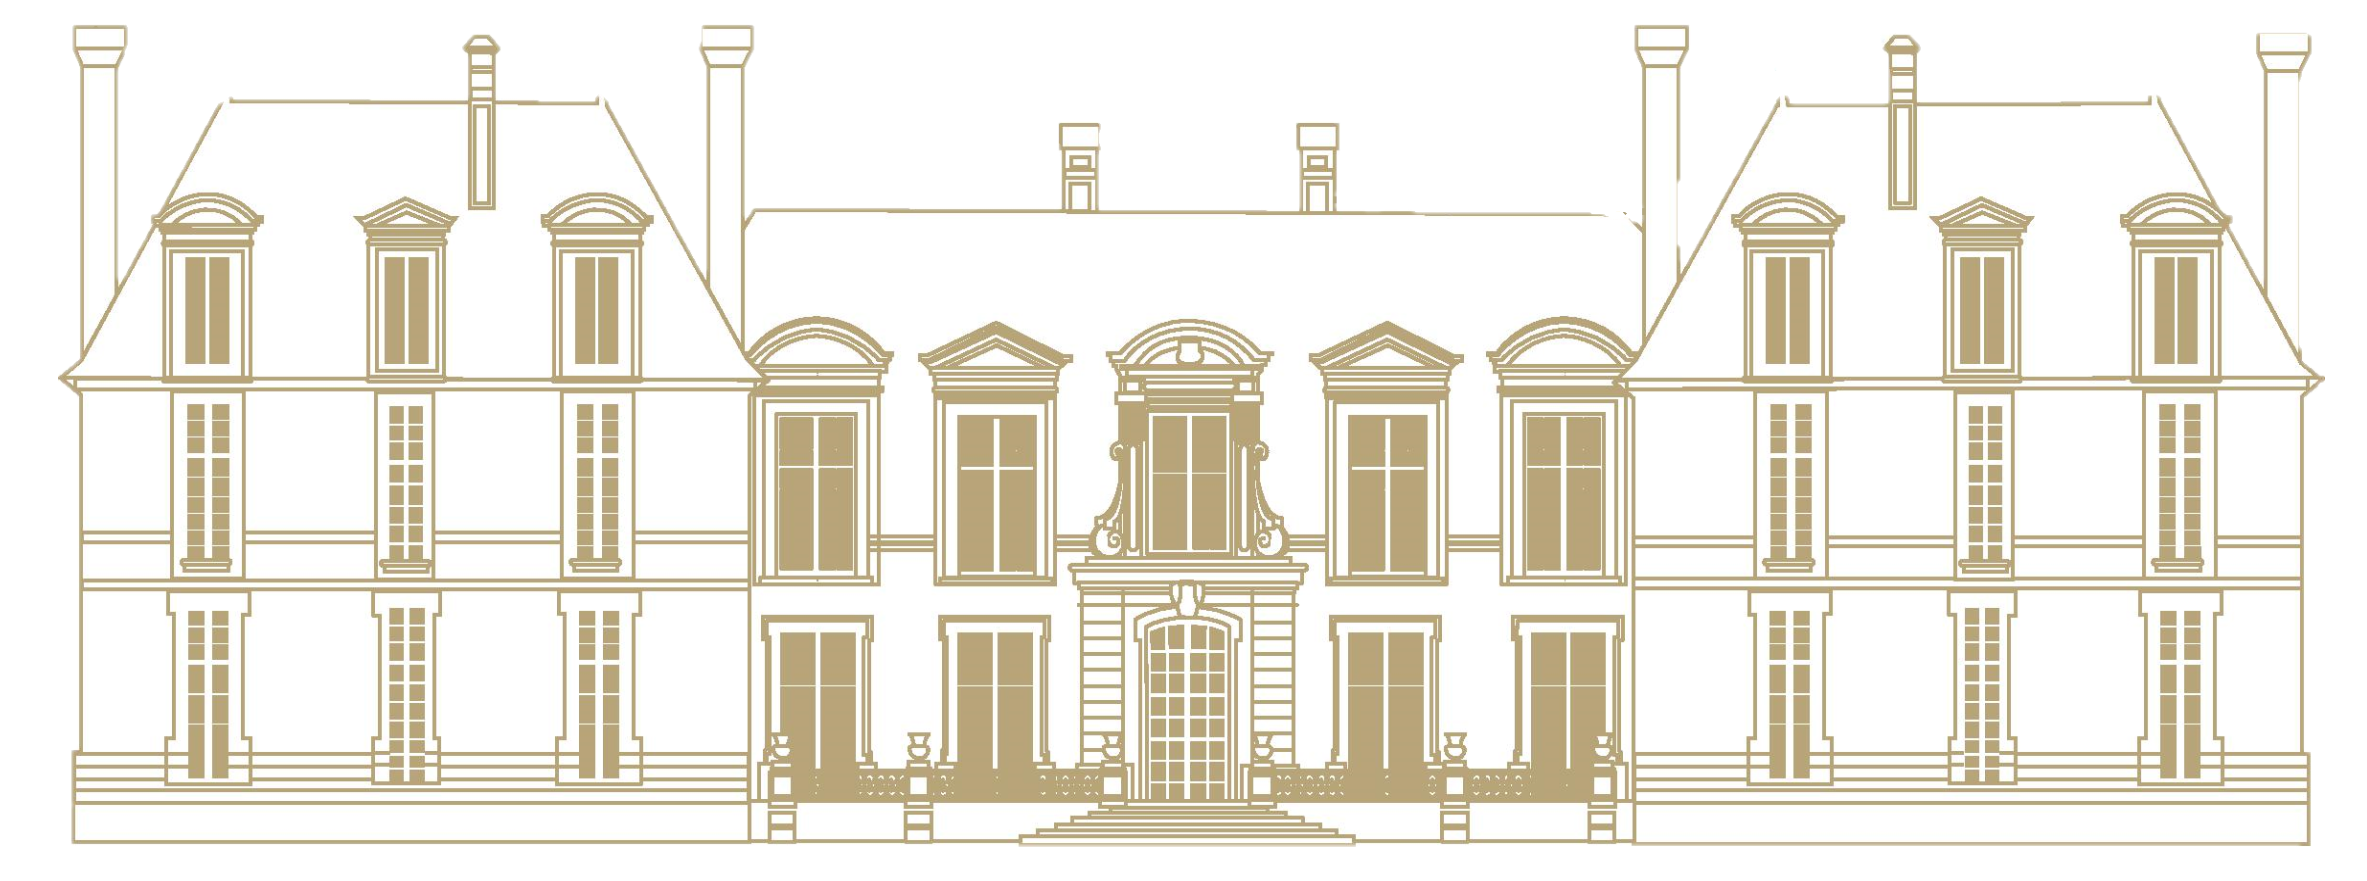 Château de Thoiry | Festival of Modern Architecture 2020 - Château de Thoiry